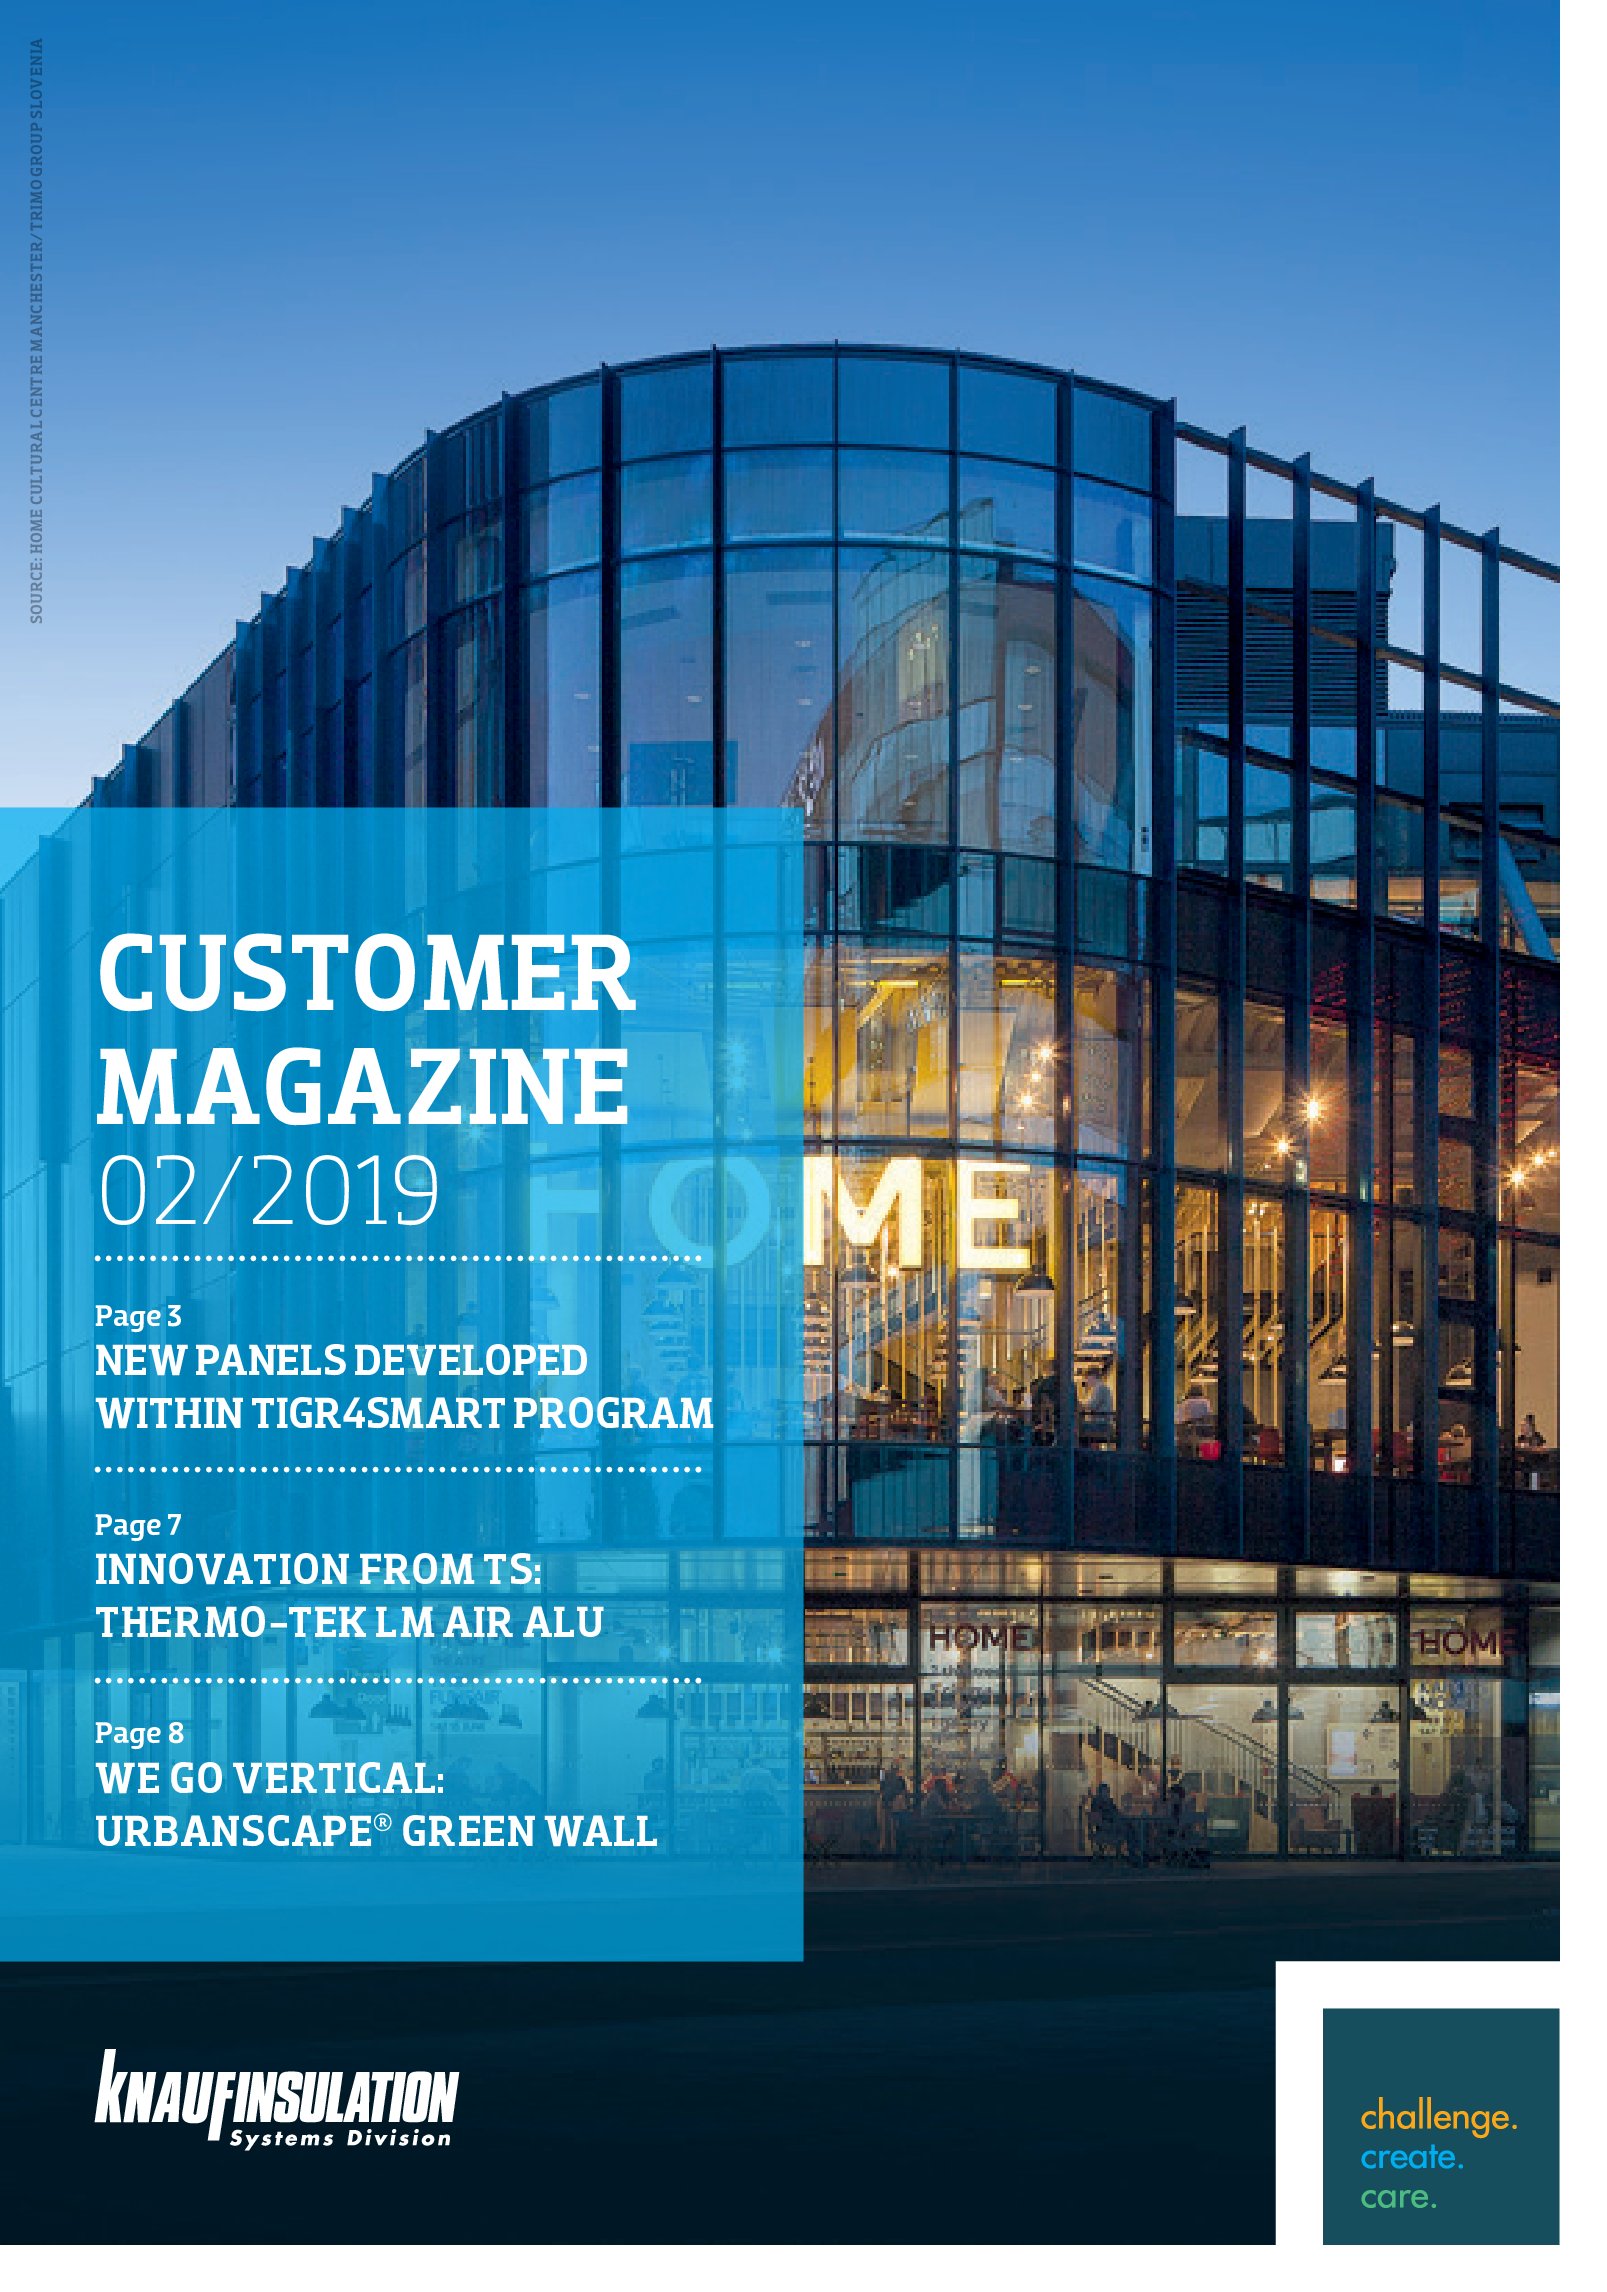 Magazine clienti_Knauf Insulation Systems Division_02/2019_ anglais